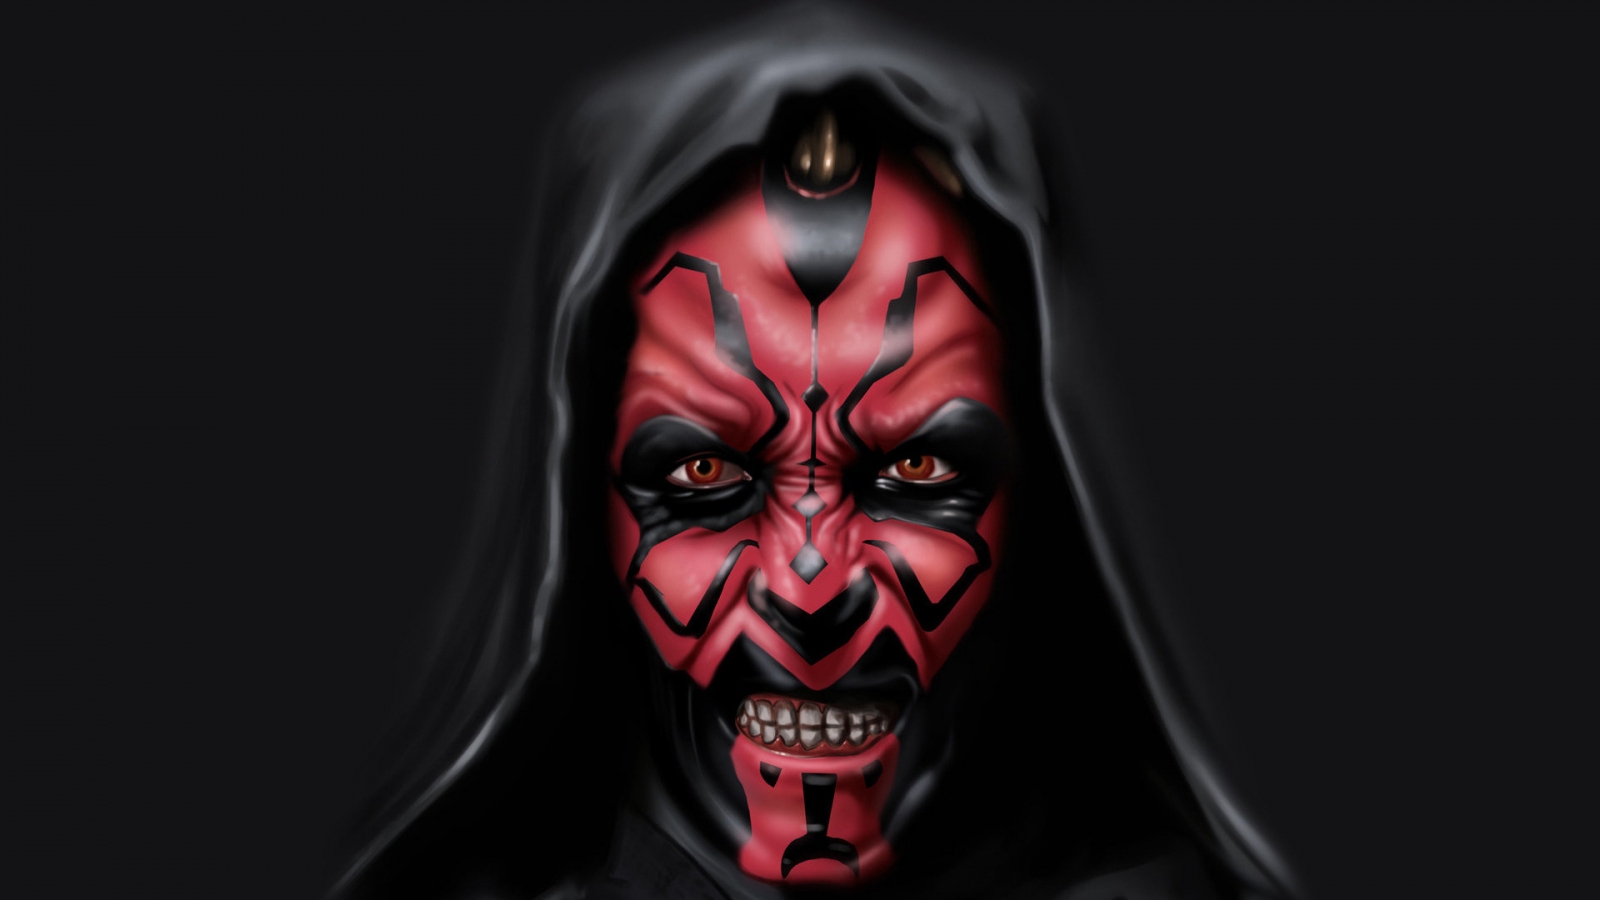 Darth Vader Animated for 1600 x 900 HDTV resolution